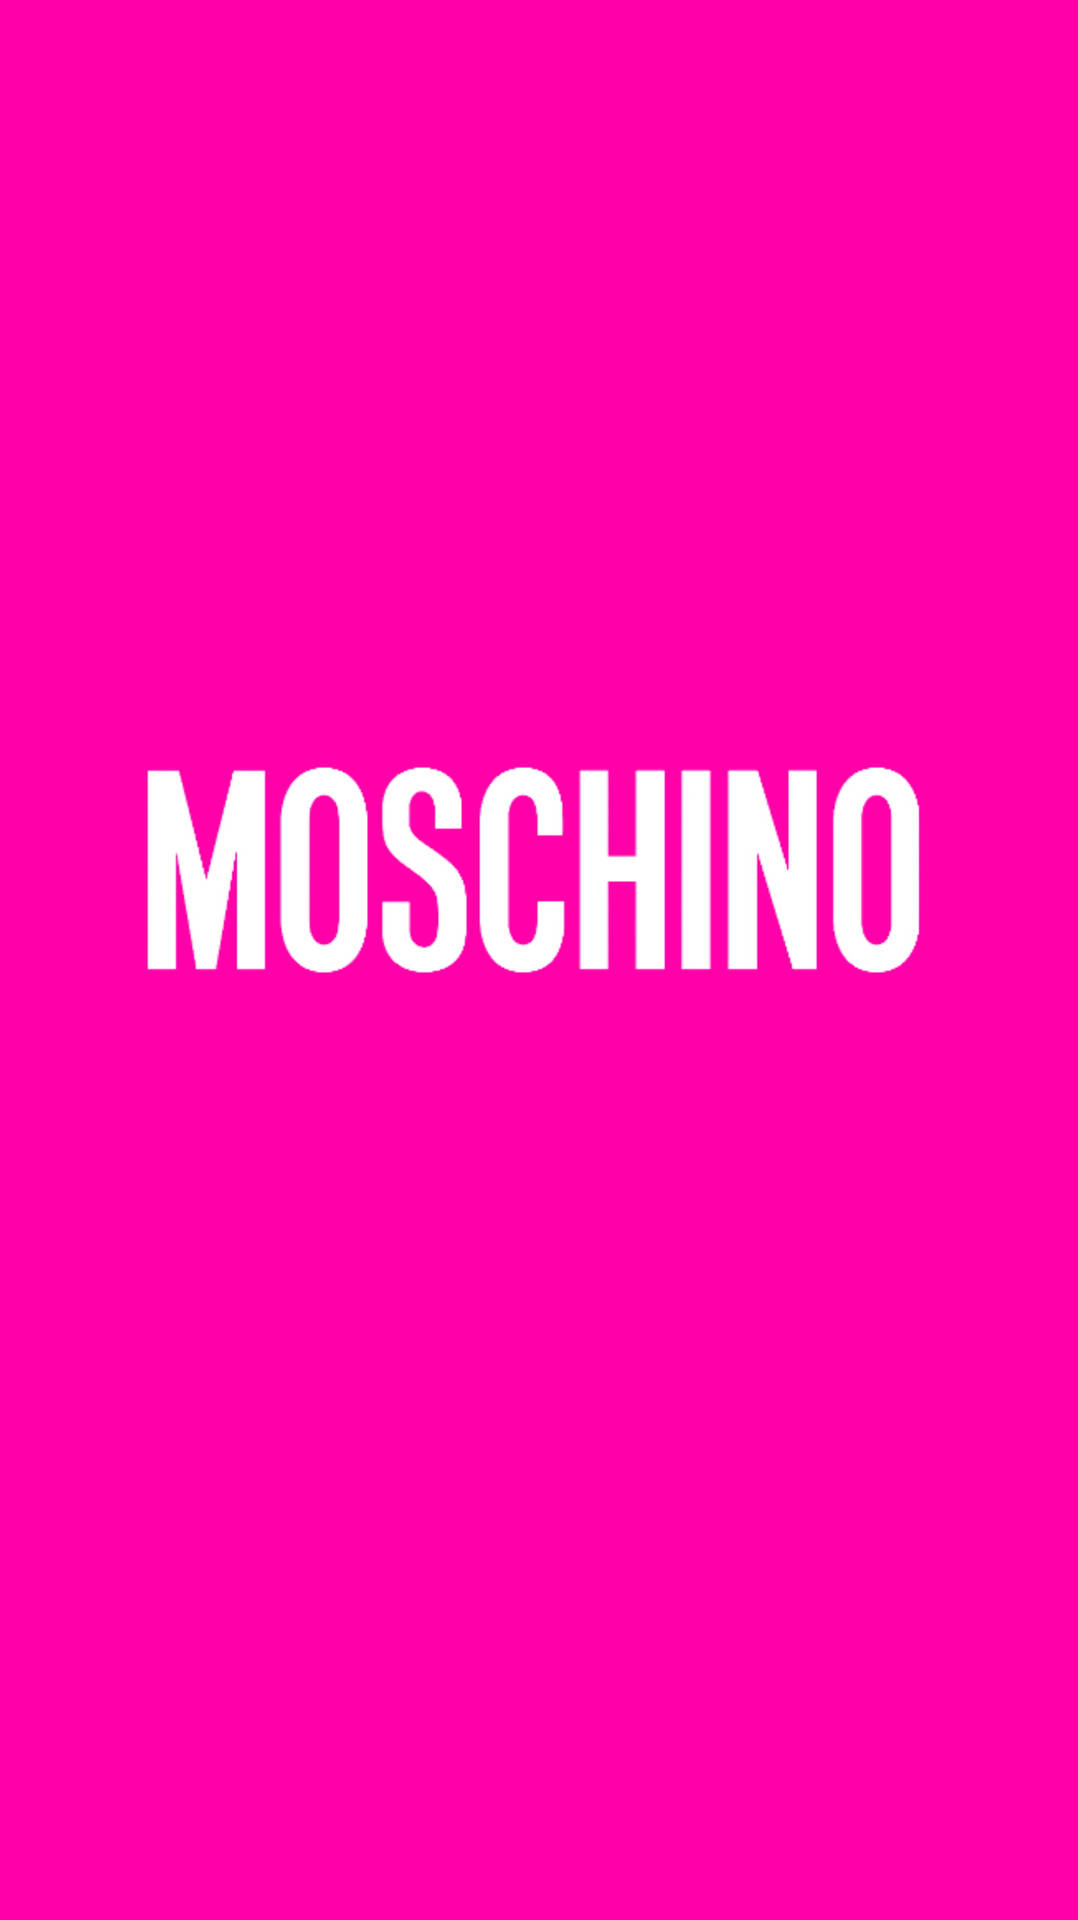 White And Pink Moschino Wallpaper